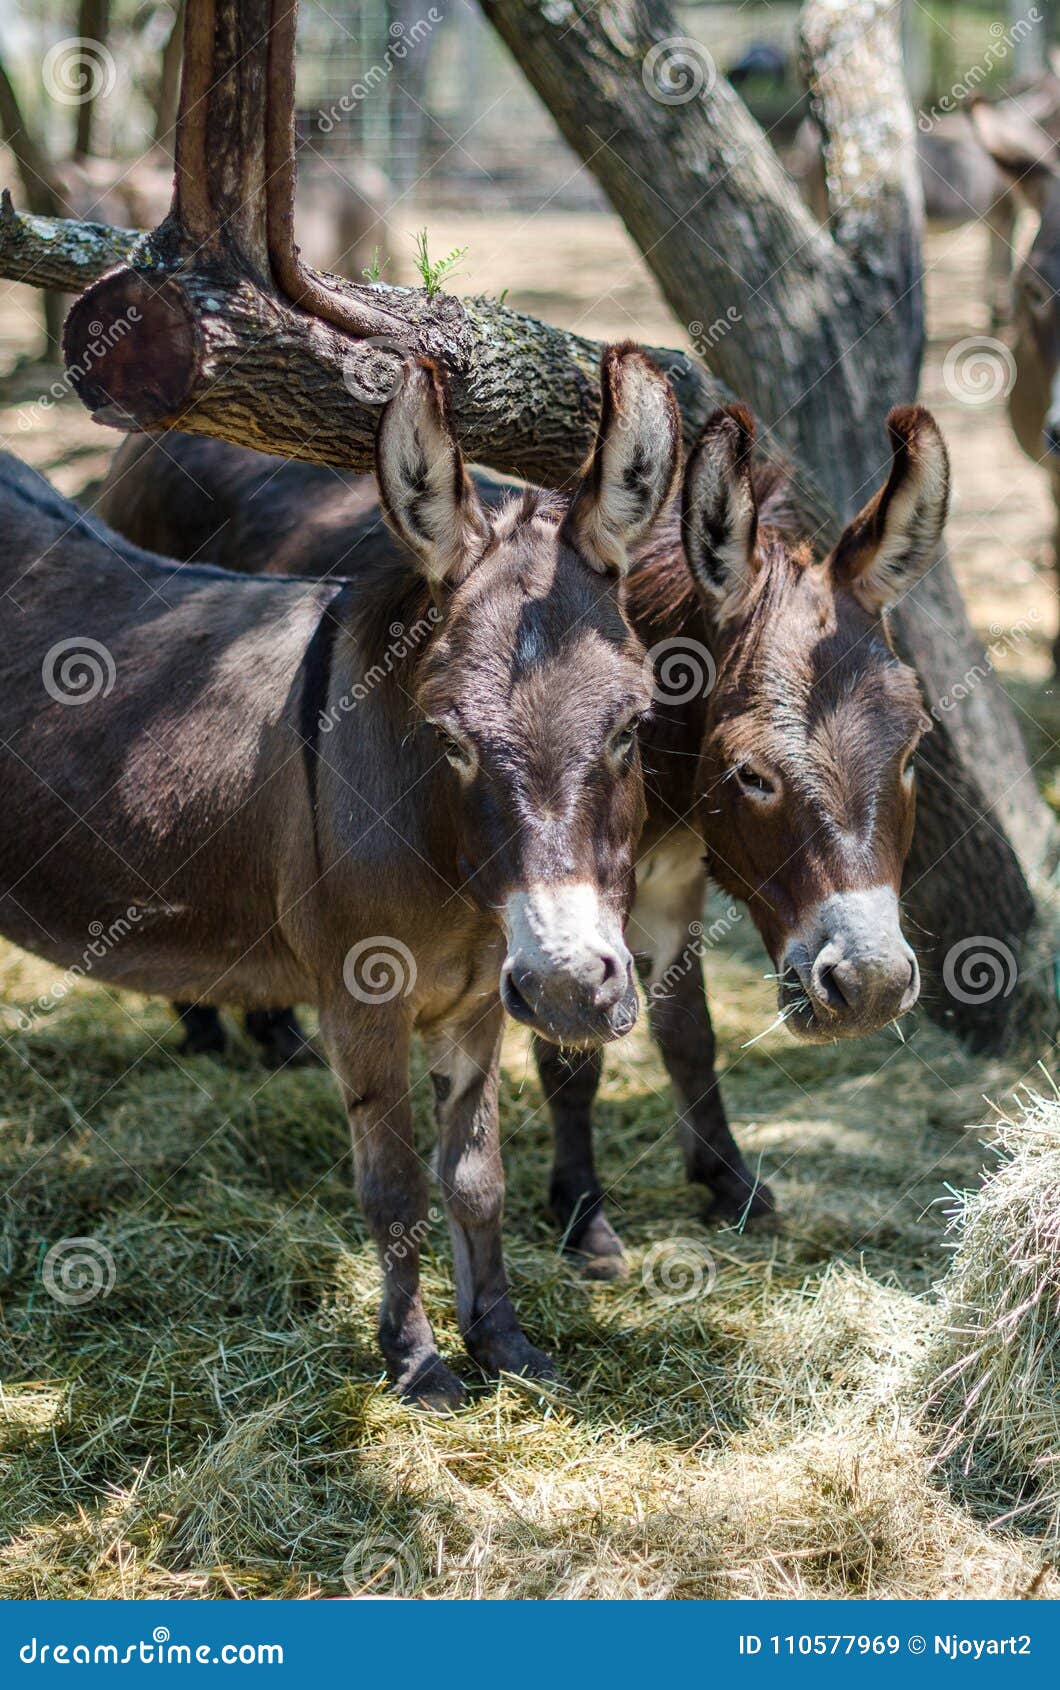 Sicilian Donkeys Eating Hay In Barnyard Stock Photo